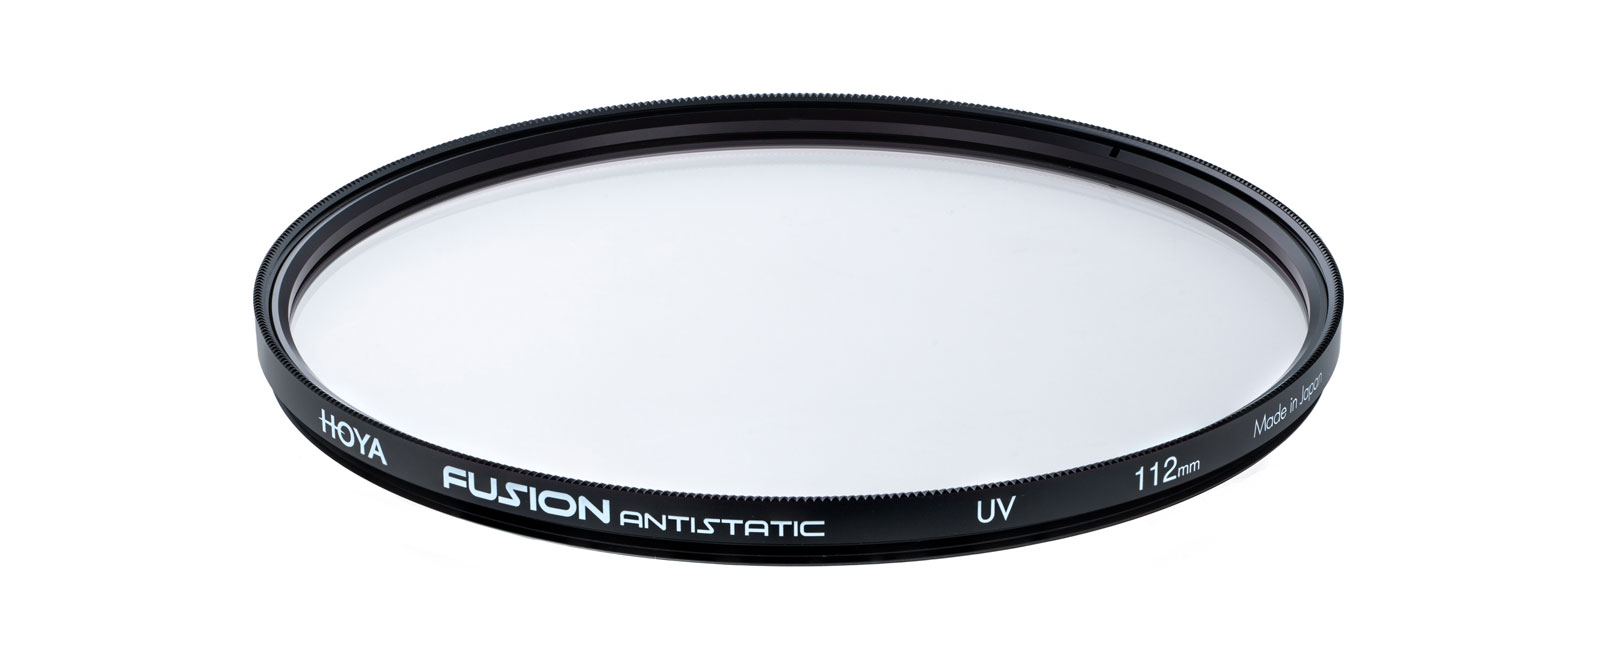 HOYA | HOYA FUSION ANTISTATIC UV 112mm filter web release